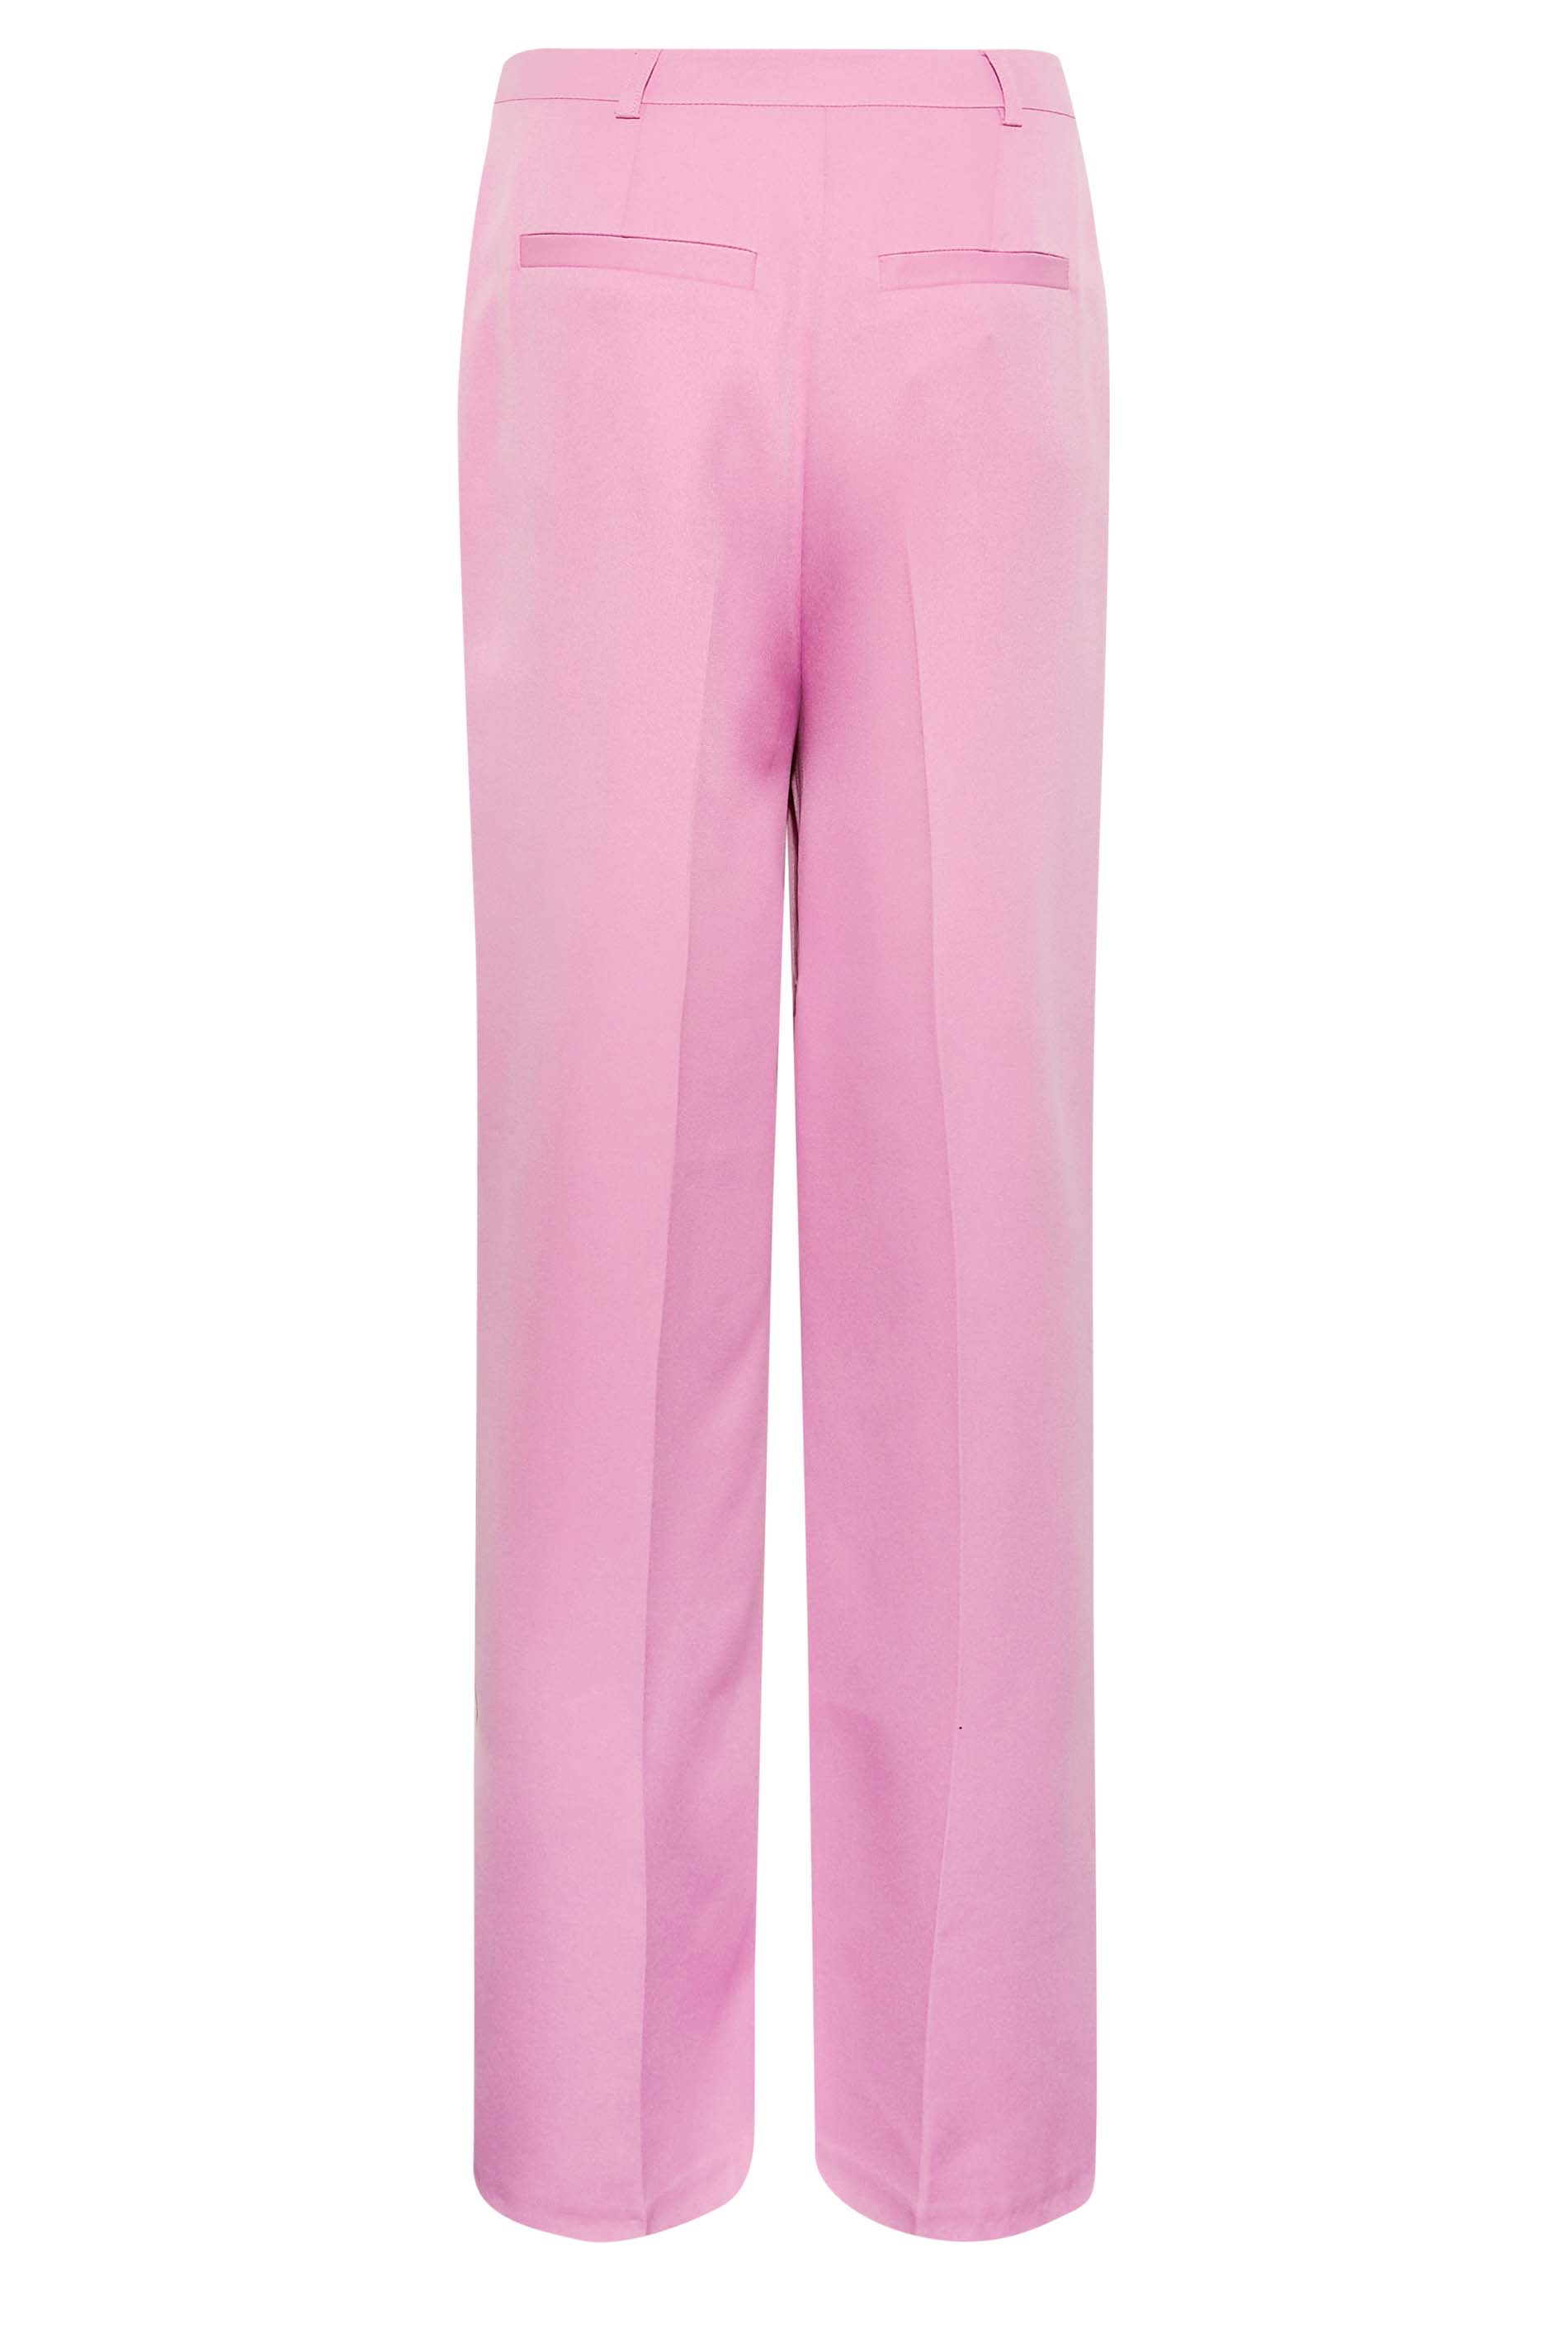 Myzora Regular Fit Women Black, Pink Trousers - Buy Myzora Regular Fit Women  Black, Pink Trousers Online at Best Prices in India | Flipkart.com